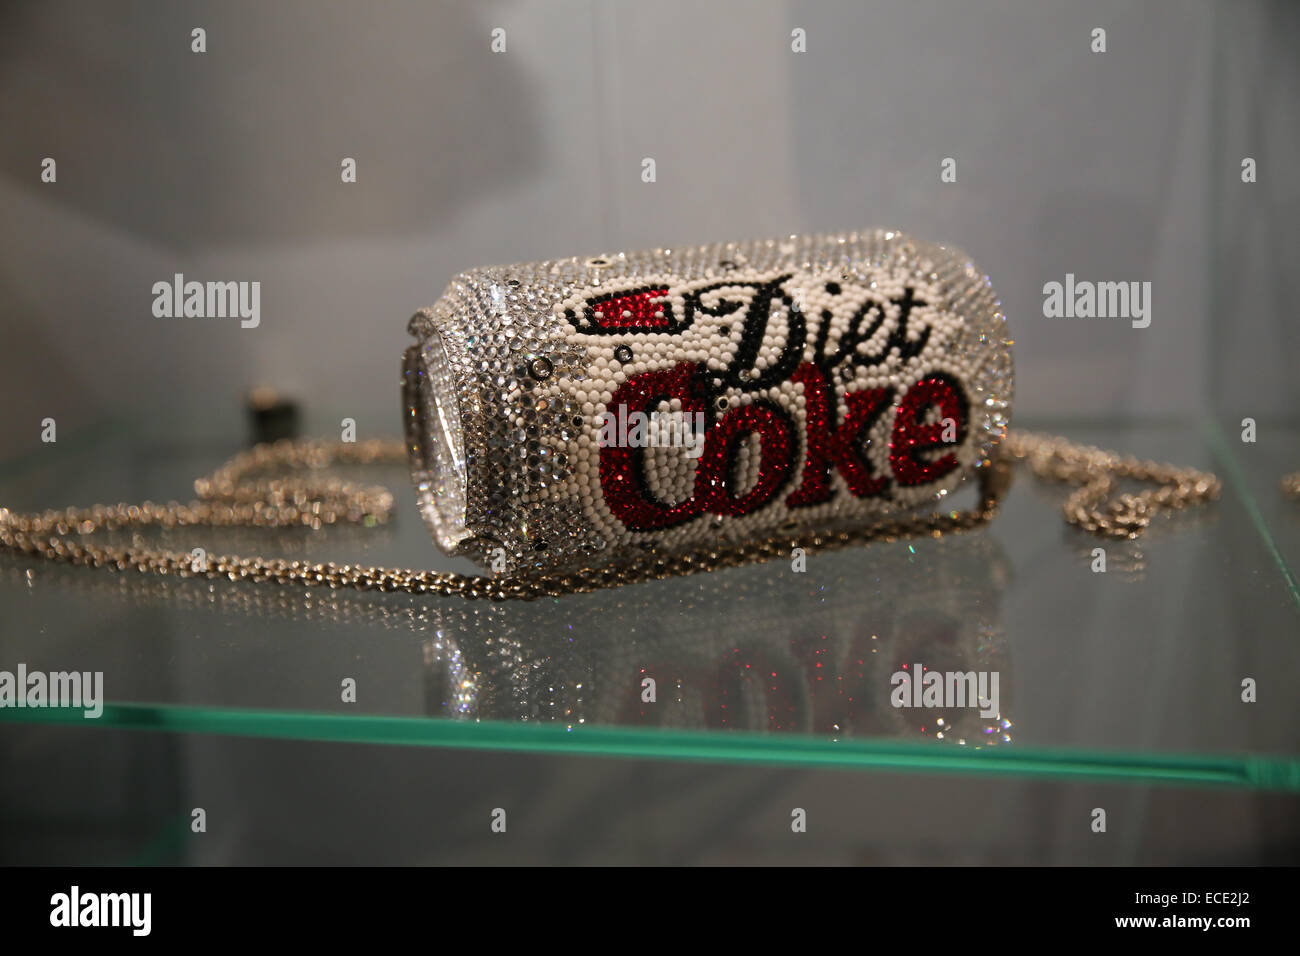 diet coke purse display inside Amsterdam bag museum Stock Photo